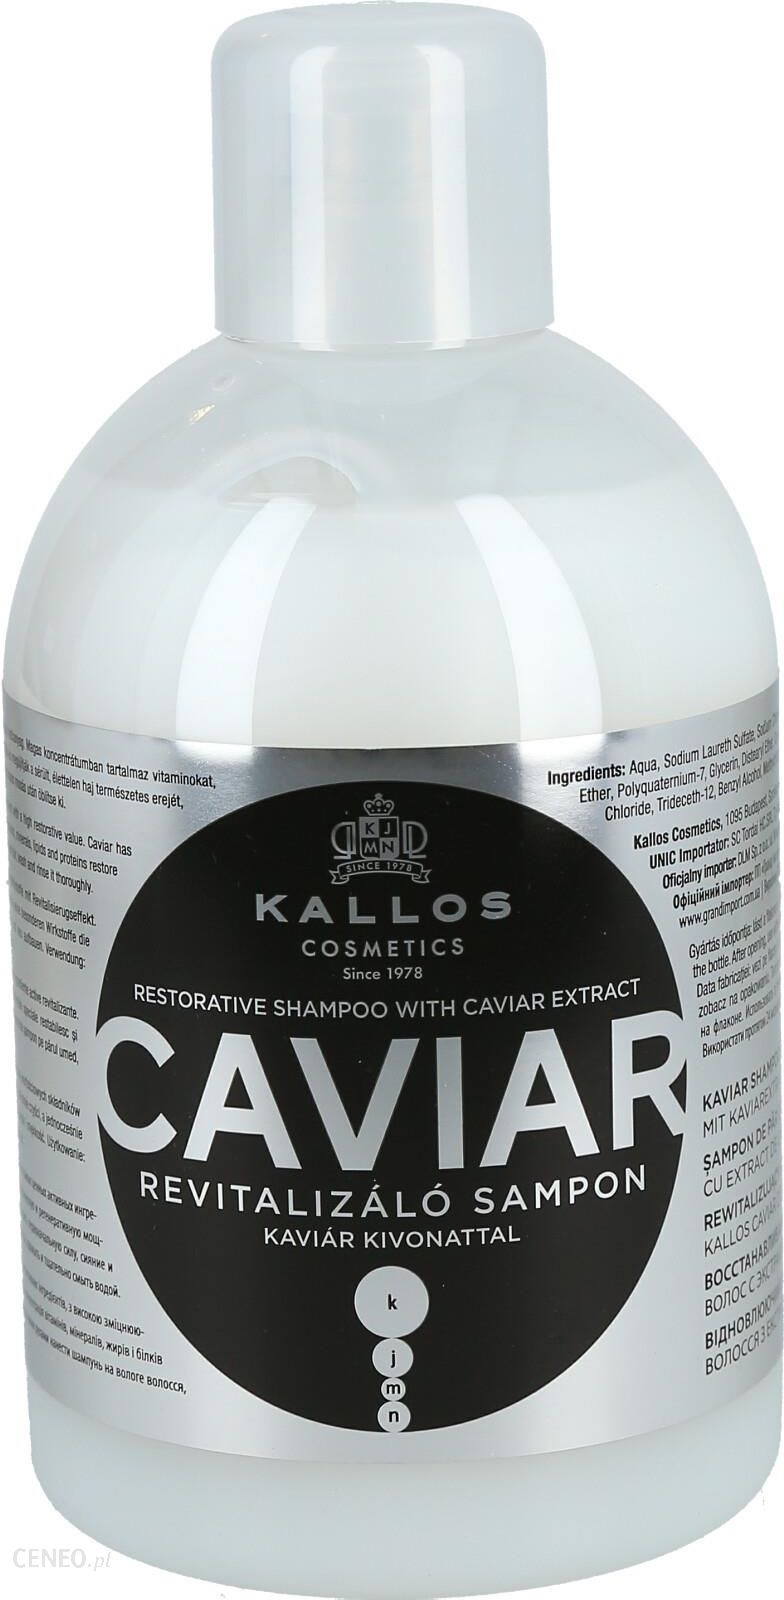 kallos caviar szampon